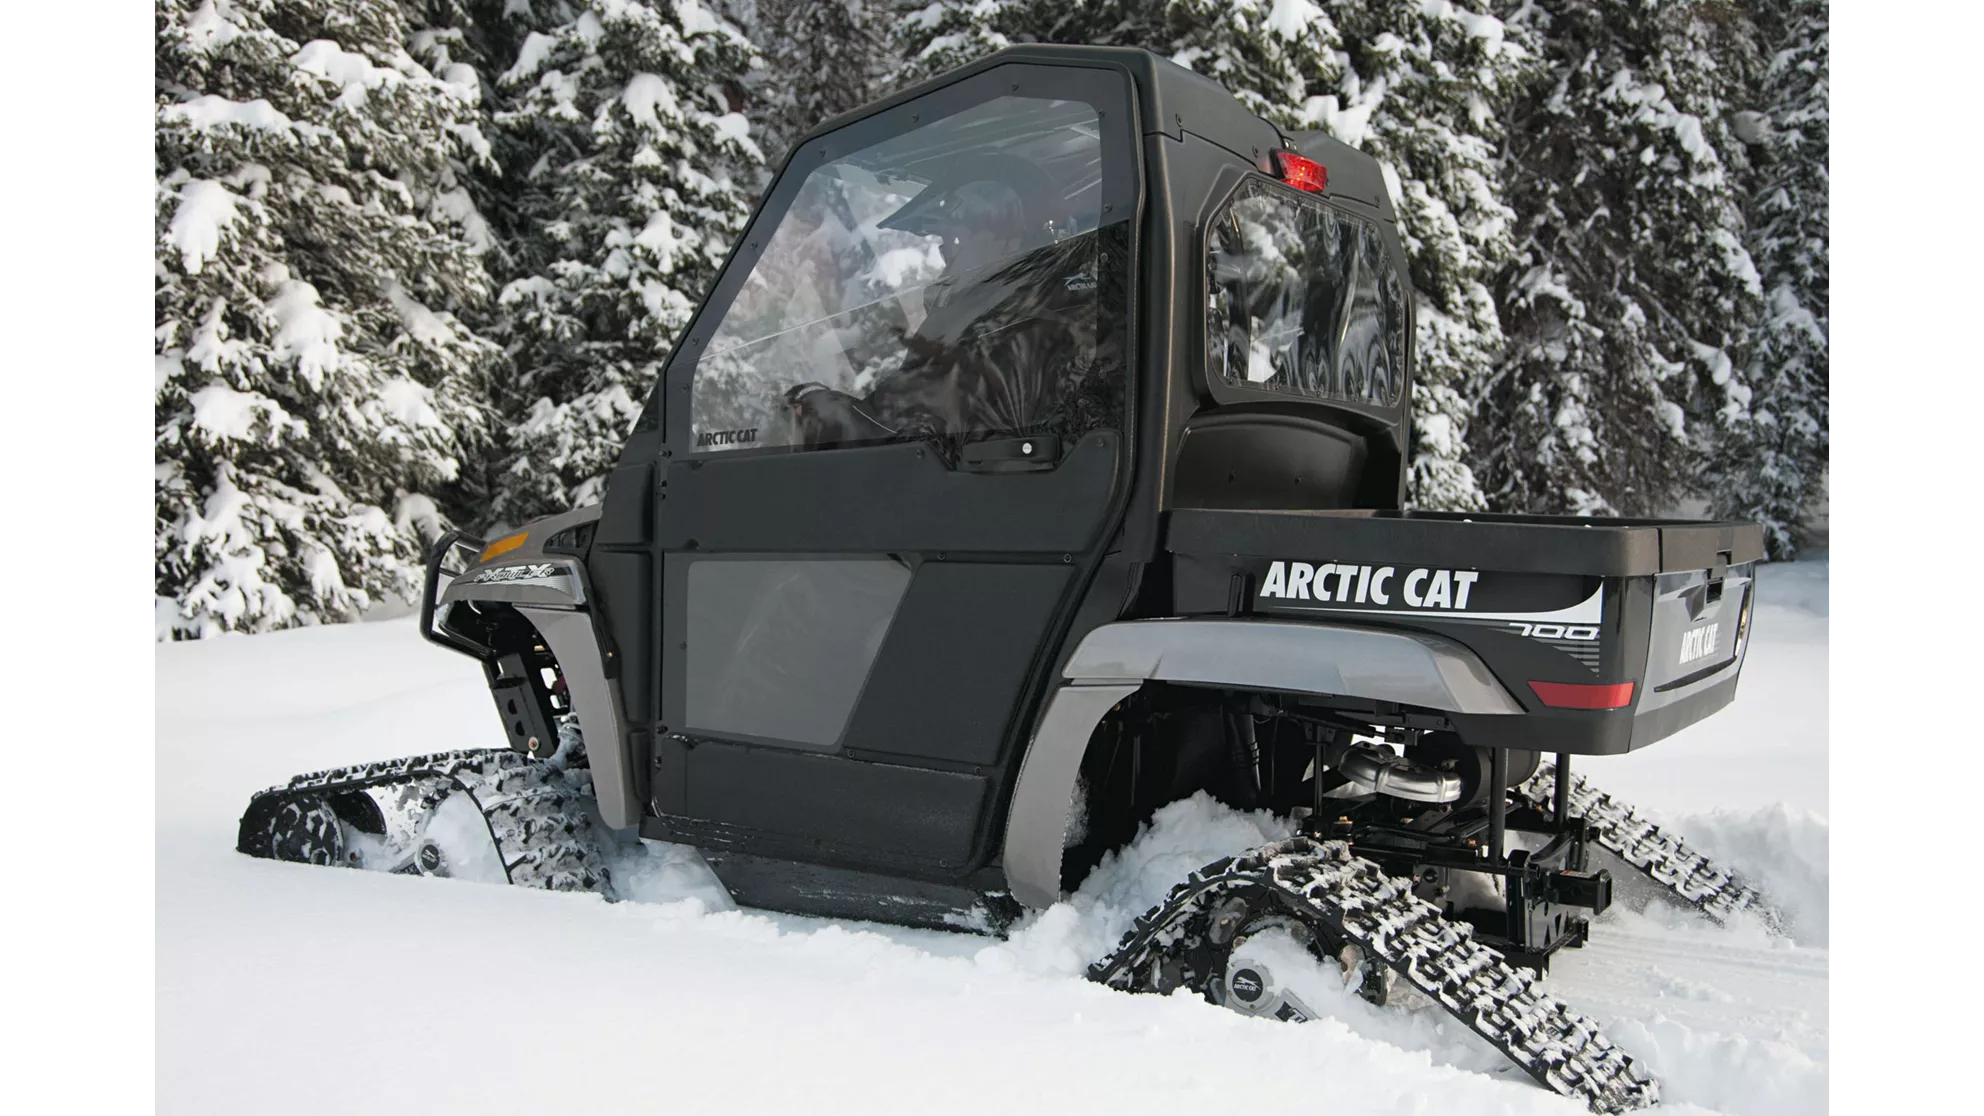 Arctic Cat Prowler 1000i - Image 5